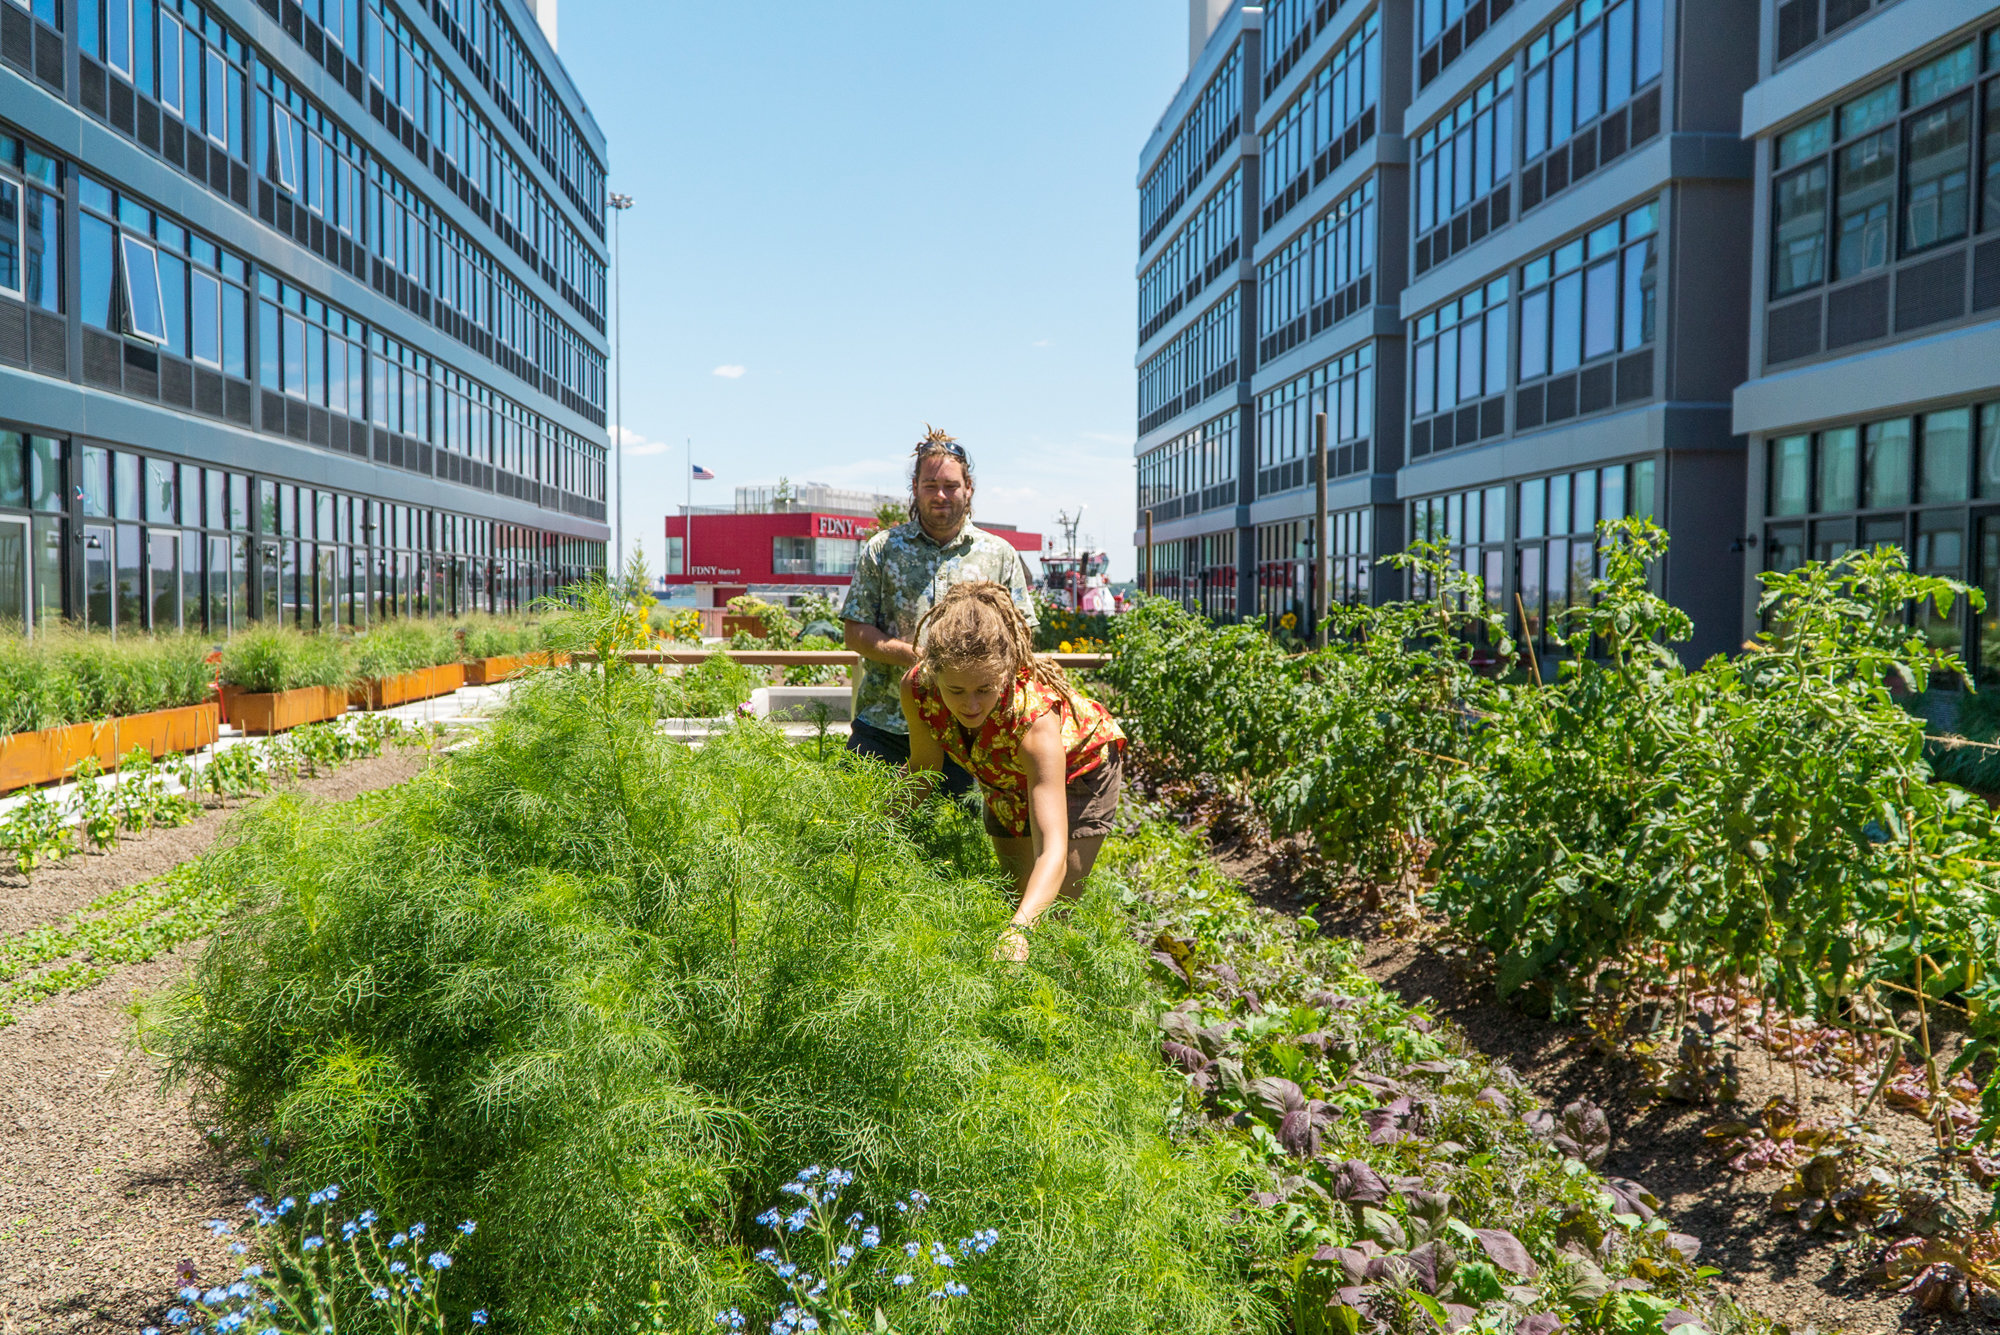 An urban gardening to donate to food banks